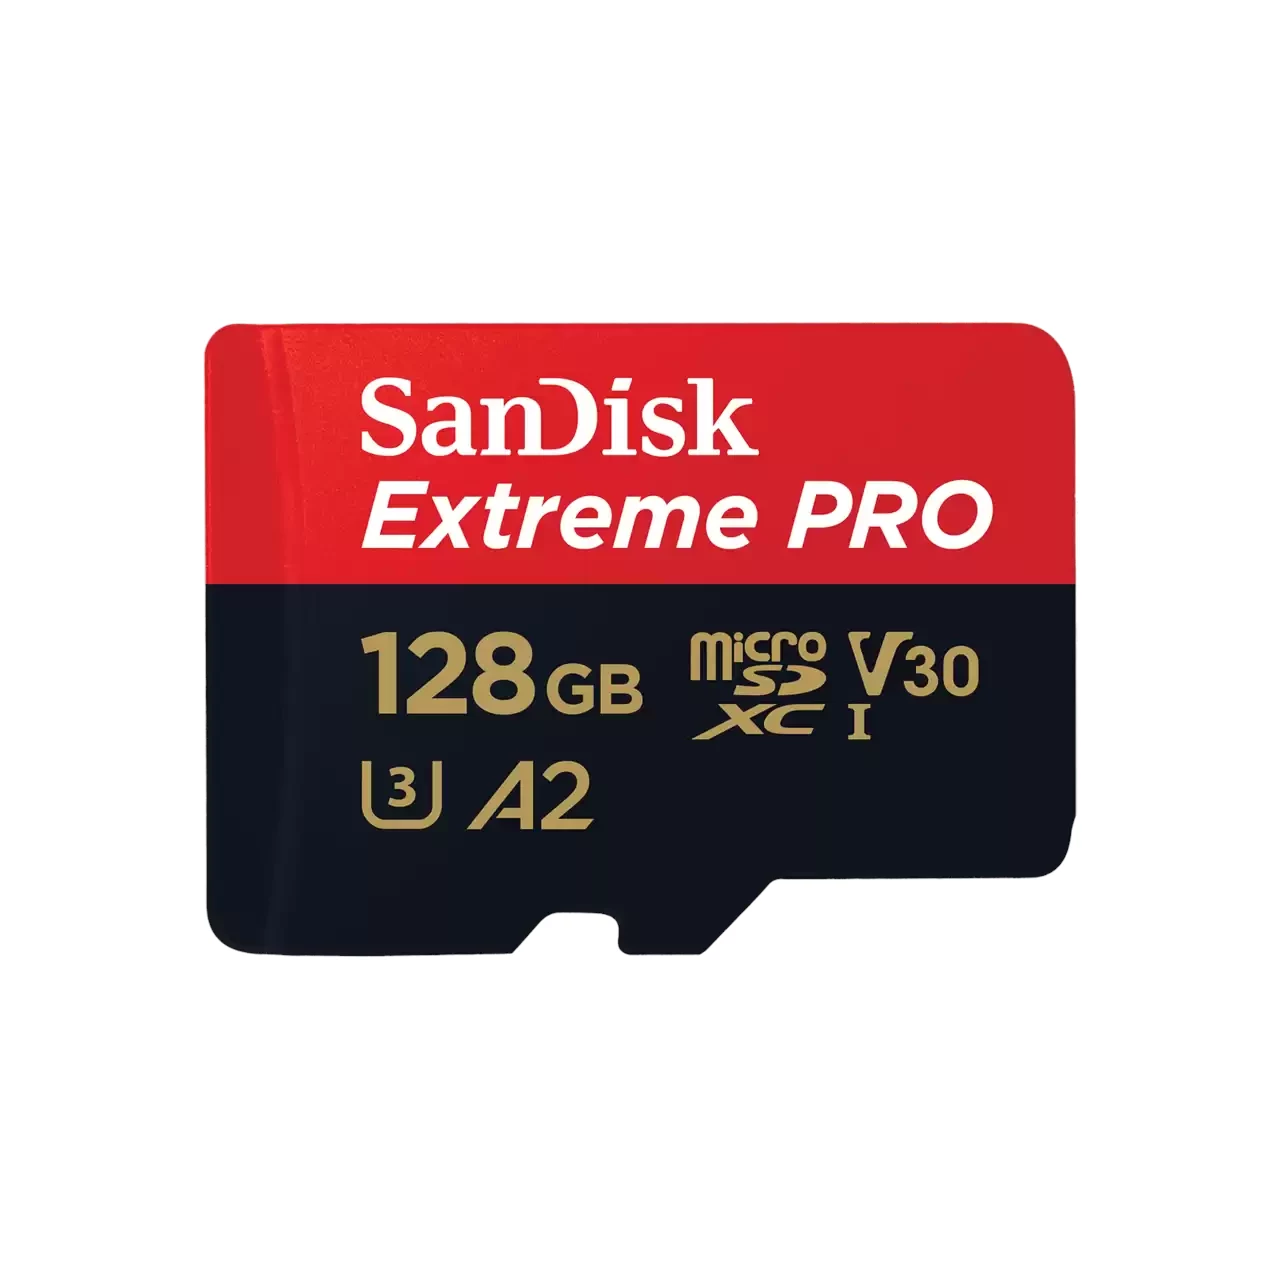 Sandisk Extreme Pro 128Gb MicroSDXC UHS-I Card #SDSQXCD-512G